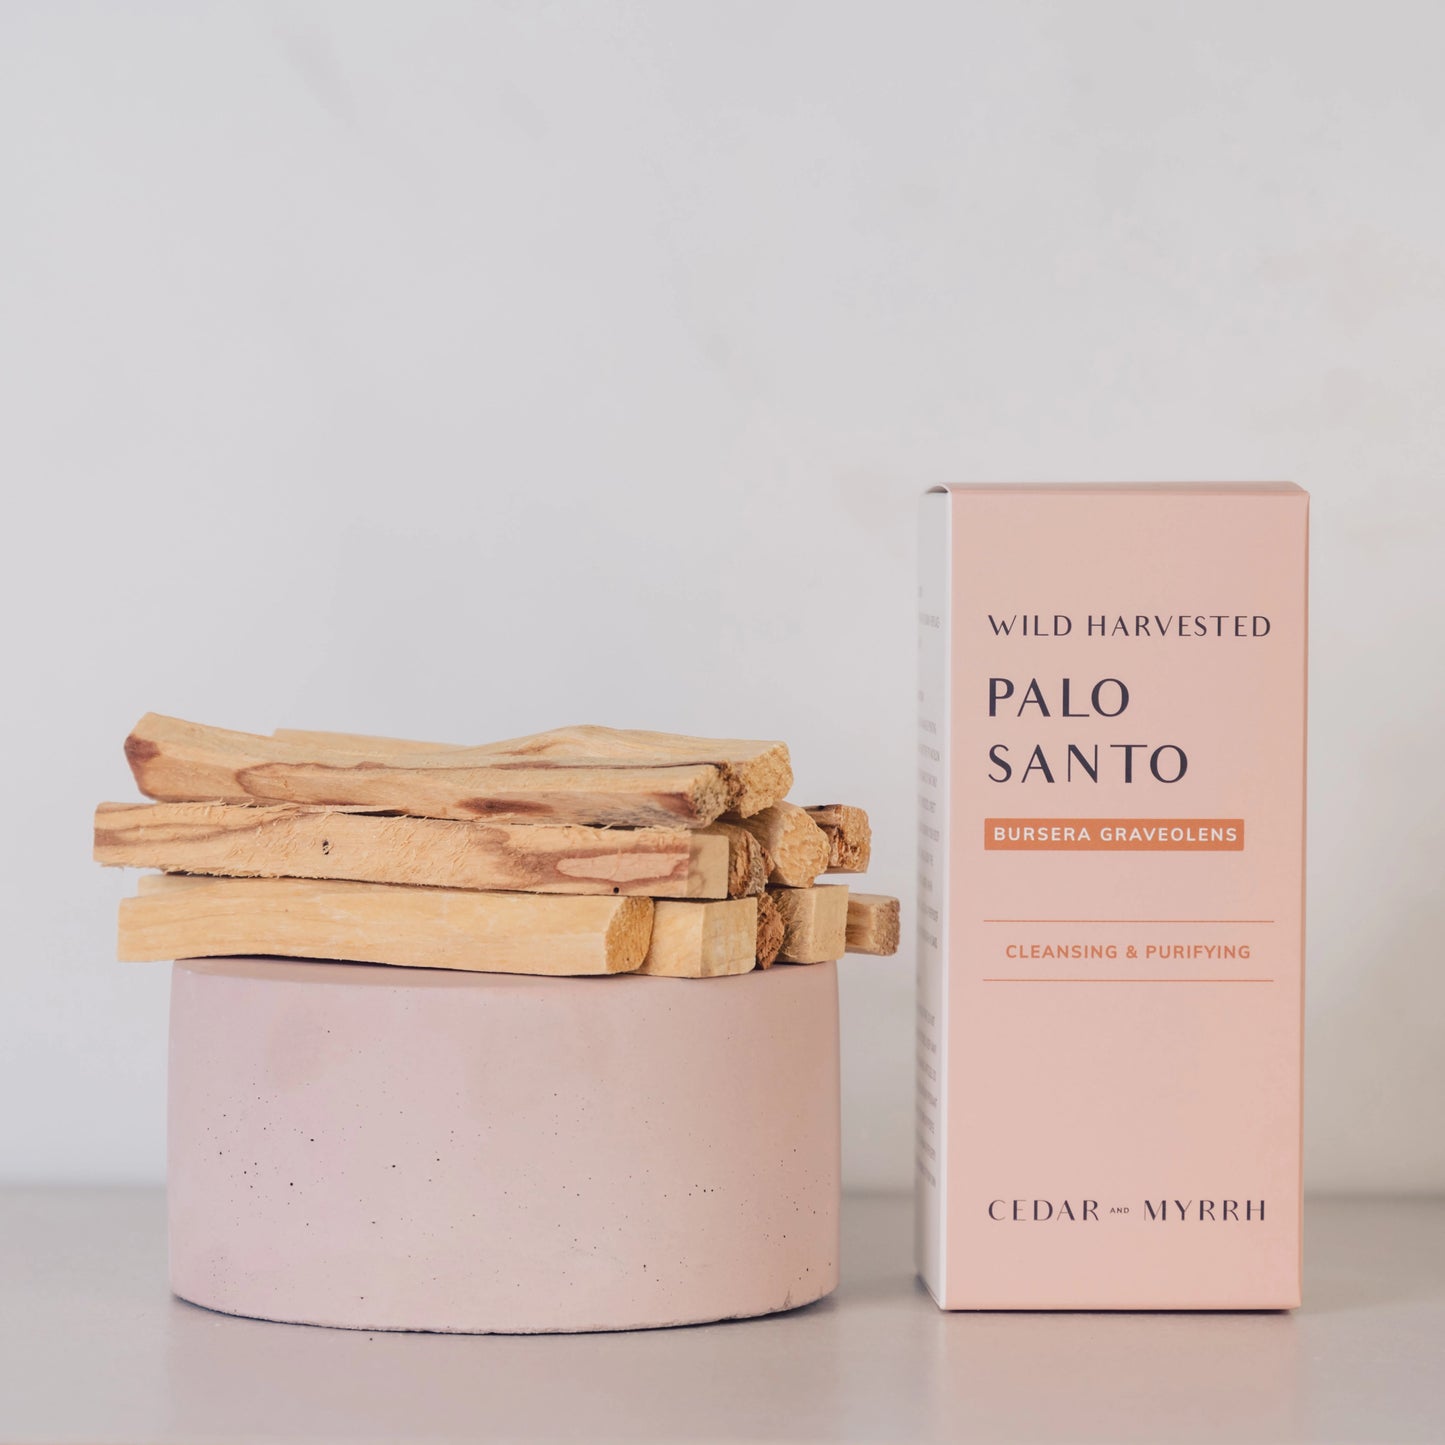 Palo Santo Sticks from Peru UK